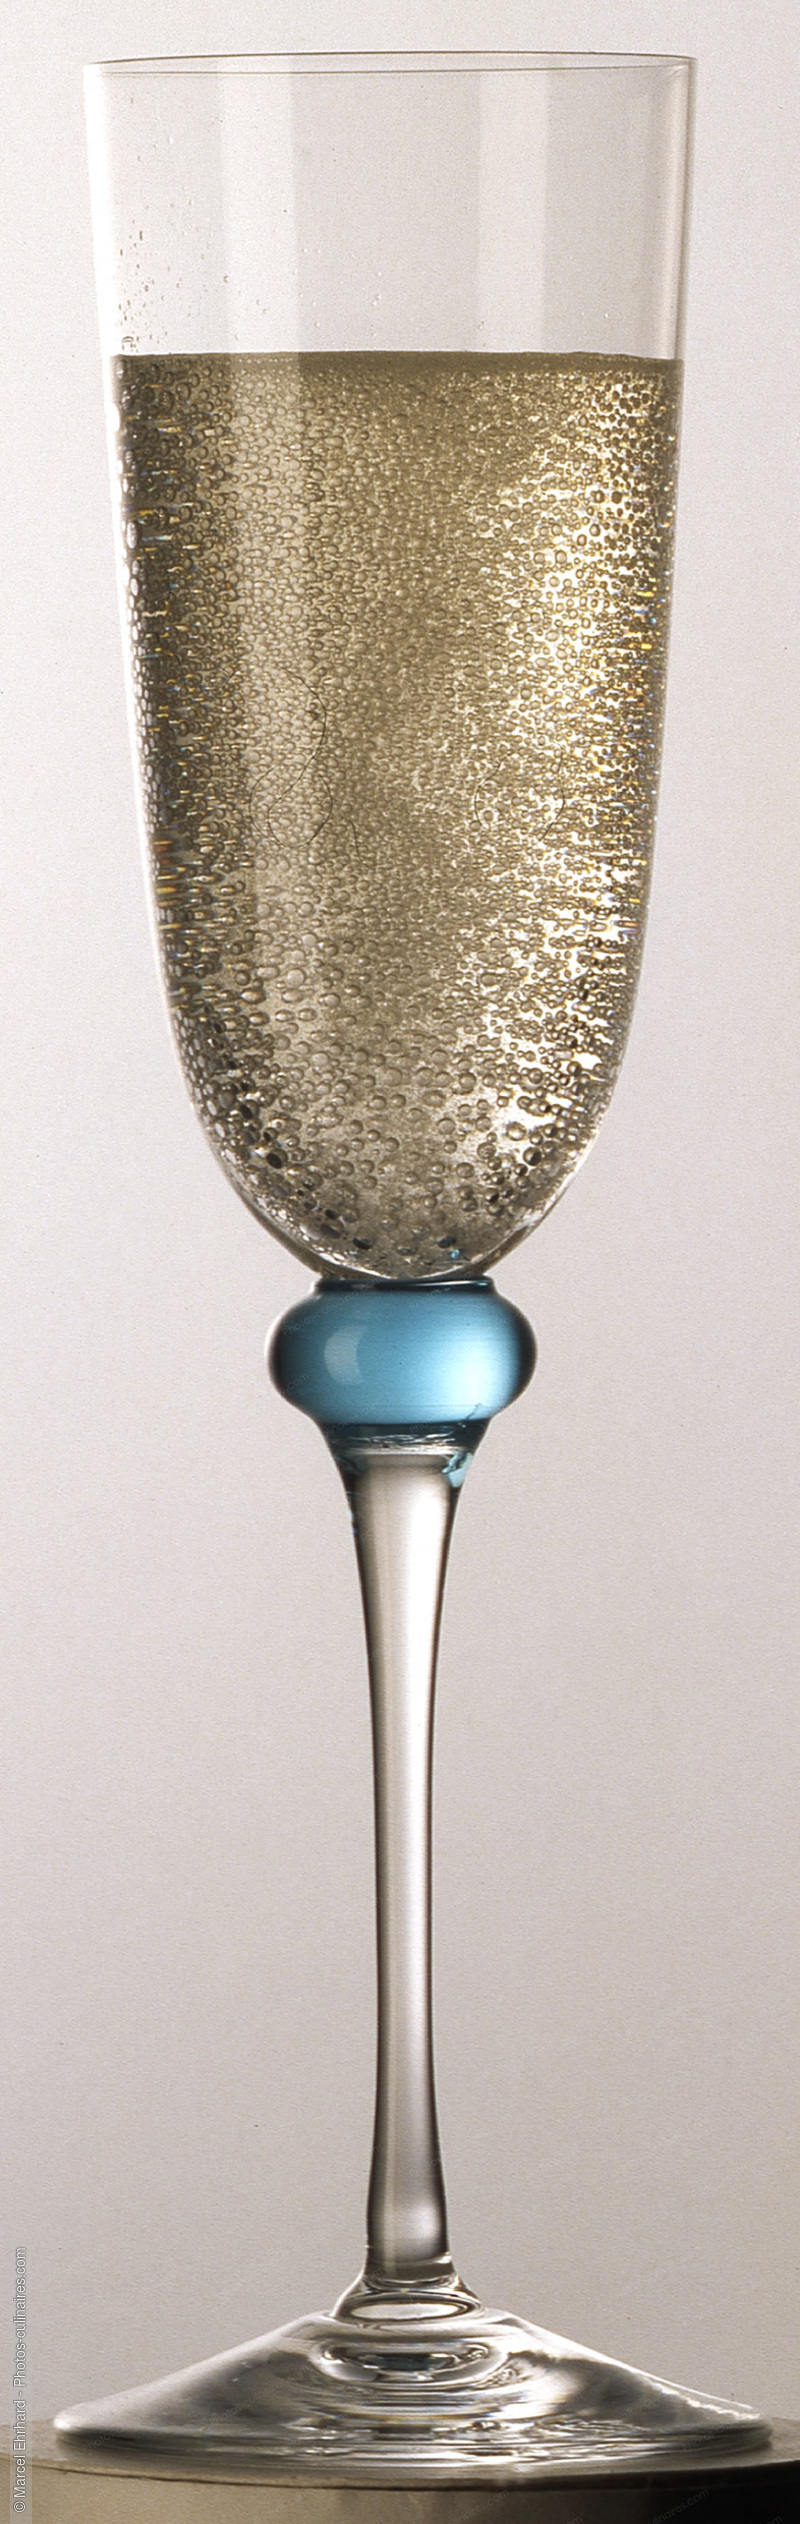 Flûte de champagne - photo référence BO42.jpg